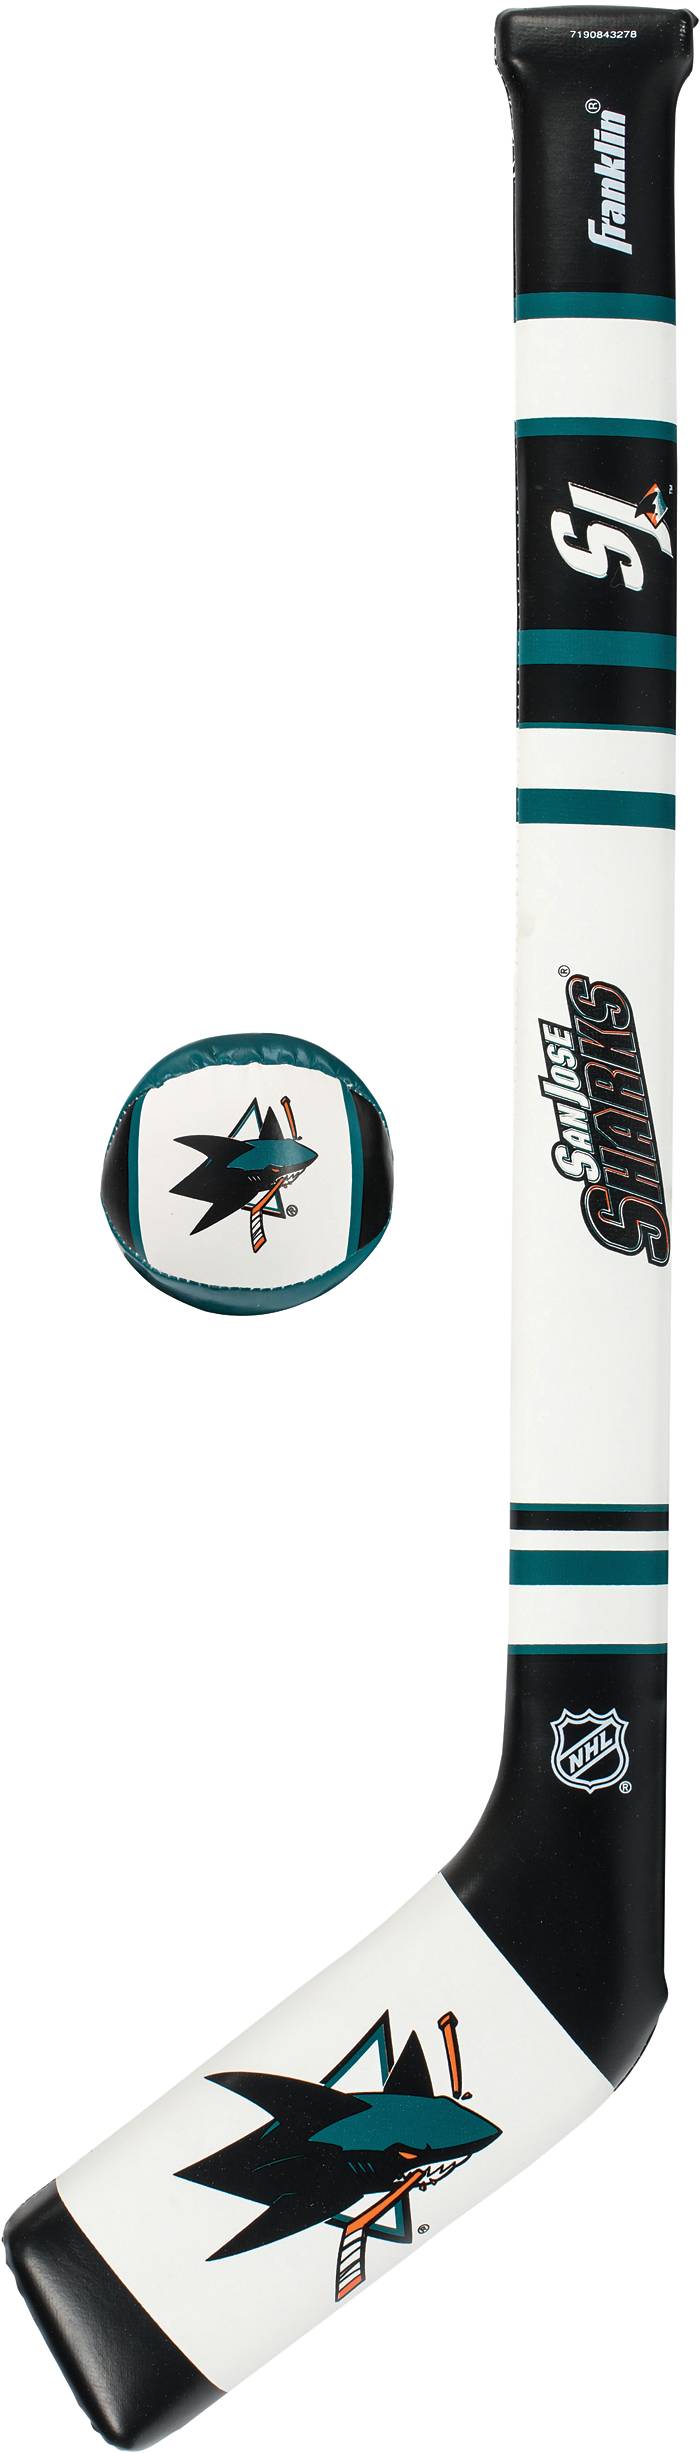 Nike San Jose Sharks NHL Fan Apparel & Souvenirs for sale